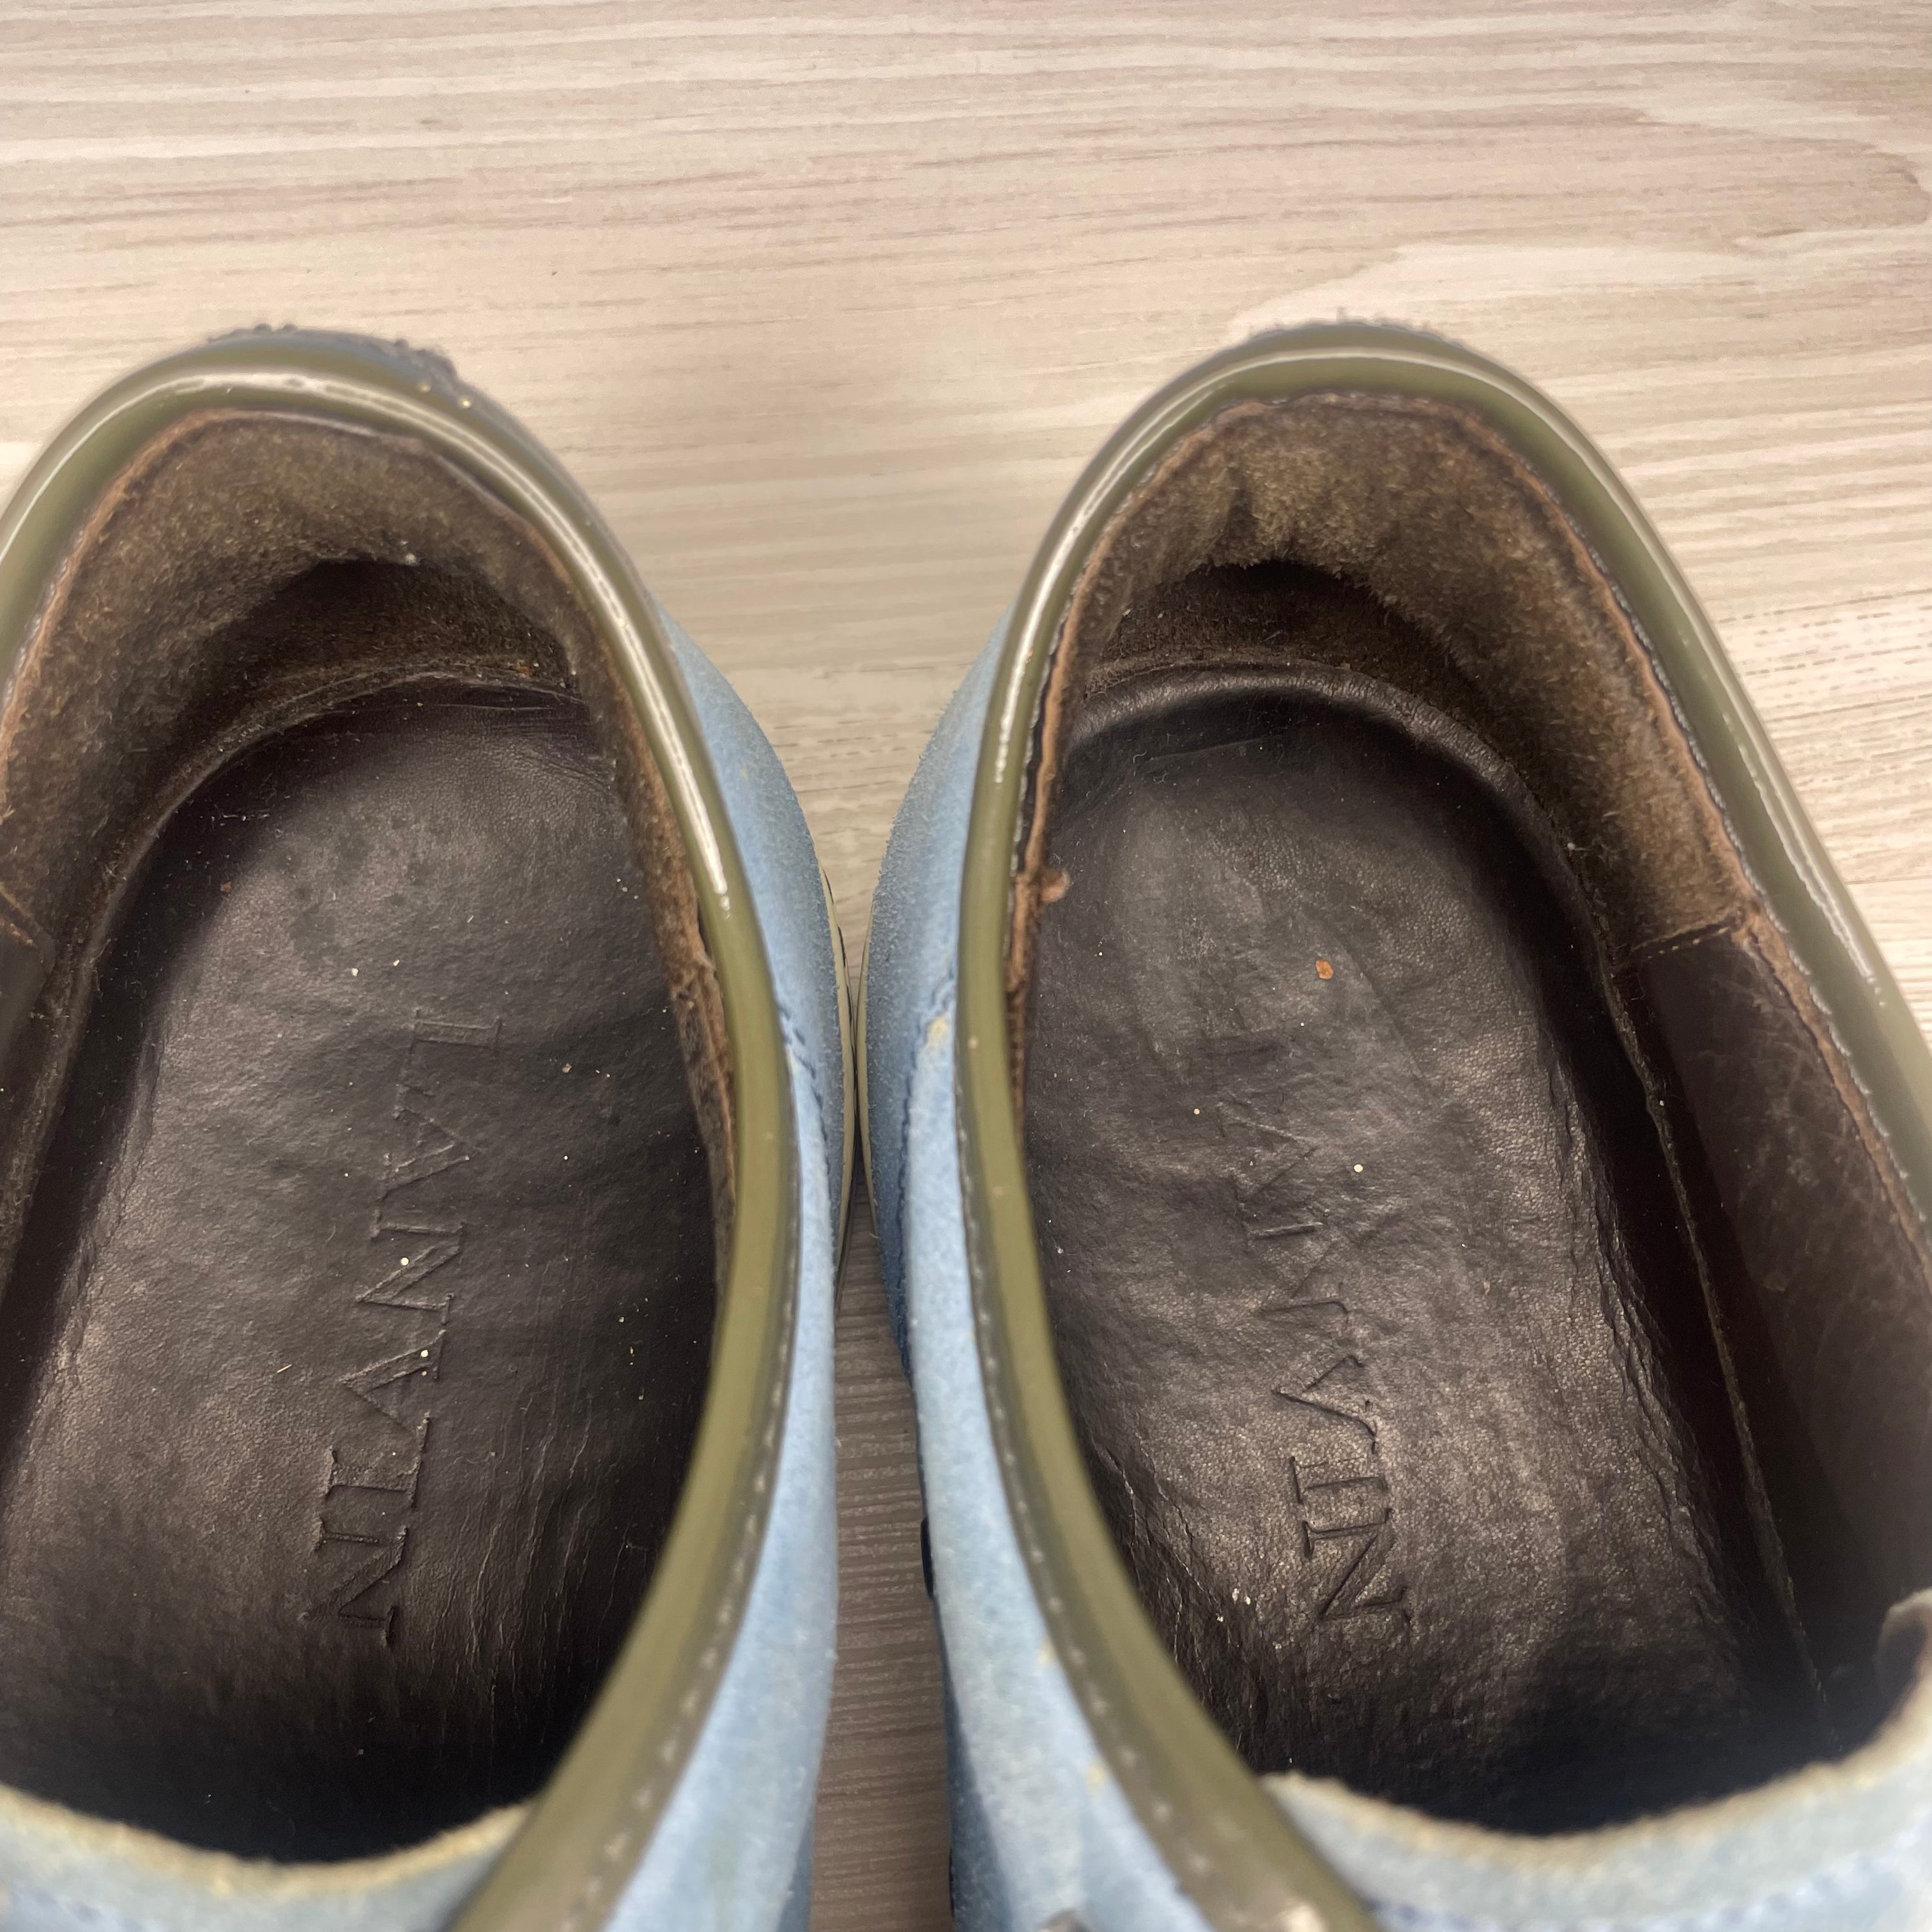 Lanvin Sneakers, 'Blå Ruskind' Lak Toe (43)